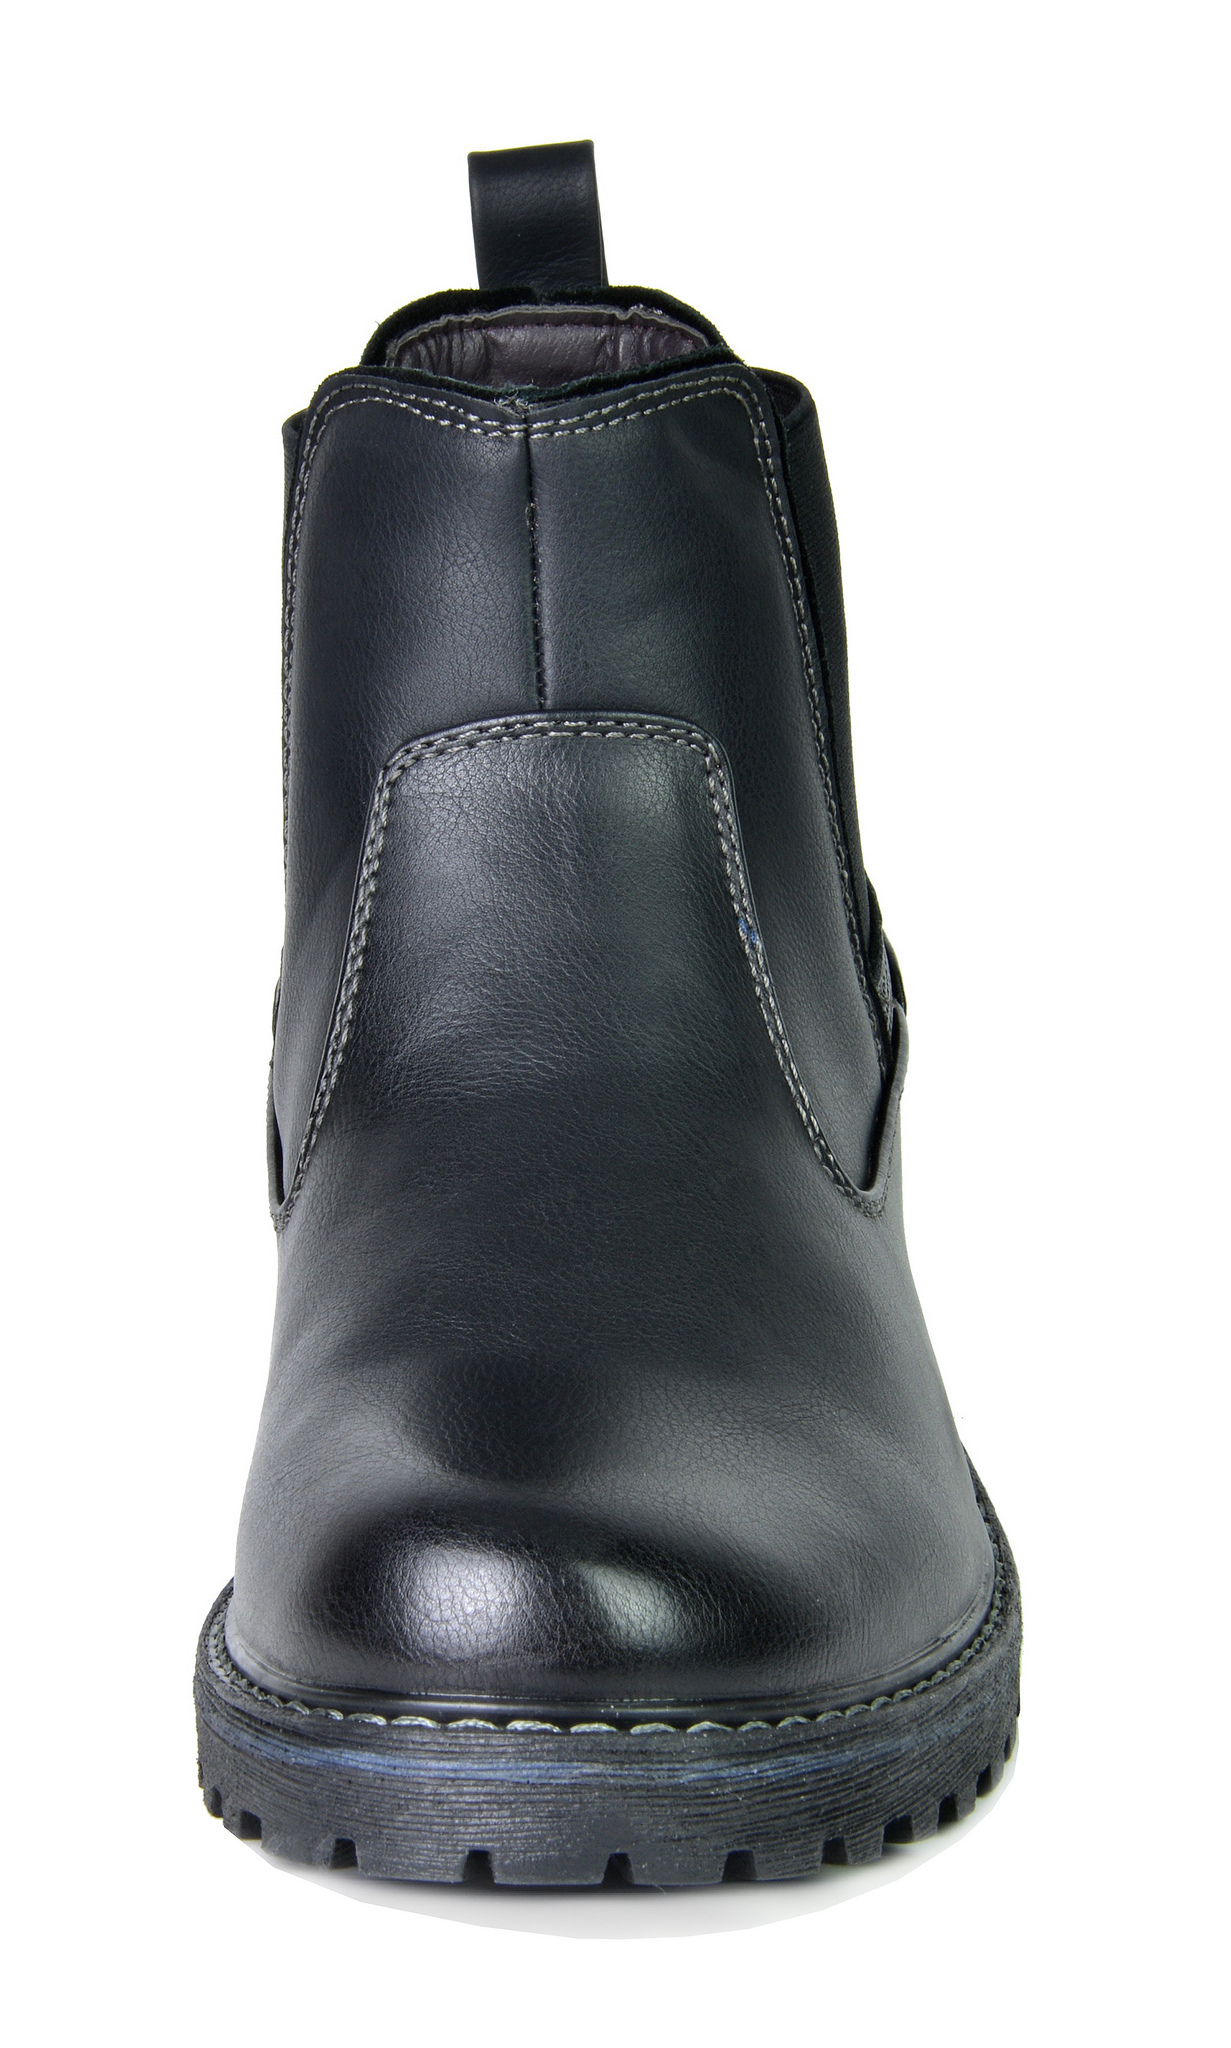 Bruno Marc Men Chelsea Ankle Boots Men's Casual Faux Leather Boots Shoes Plain Toe Slip On Desert Boots ENGLE-03 BLACK Size 8.5 - image 3 of 5